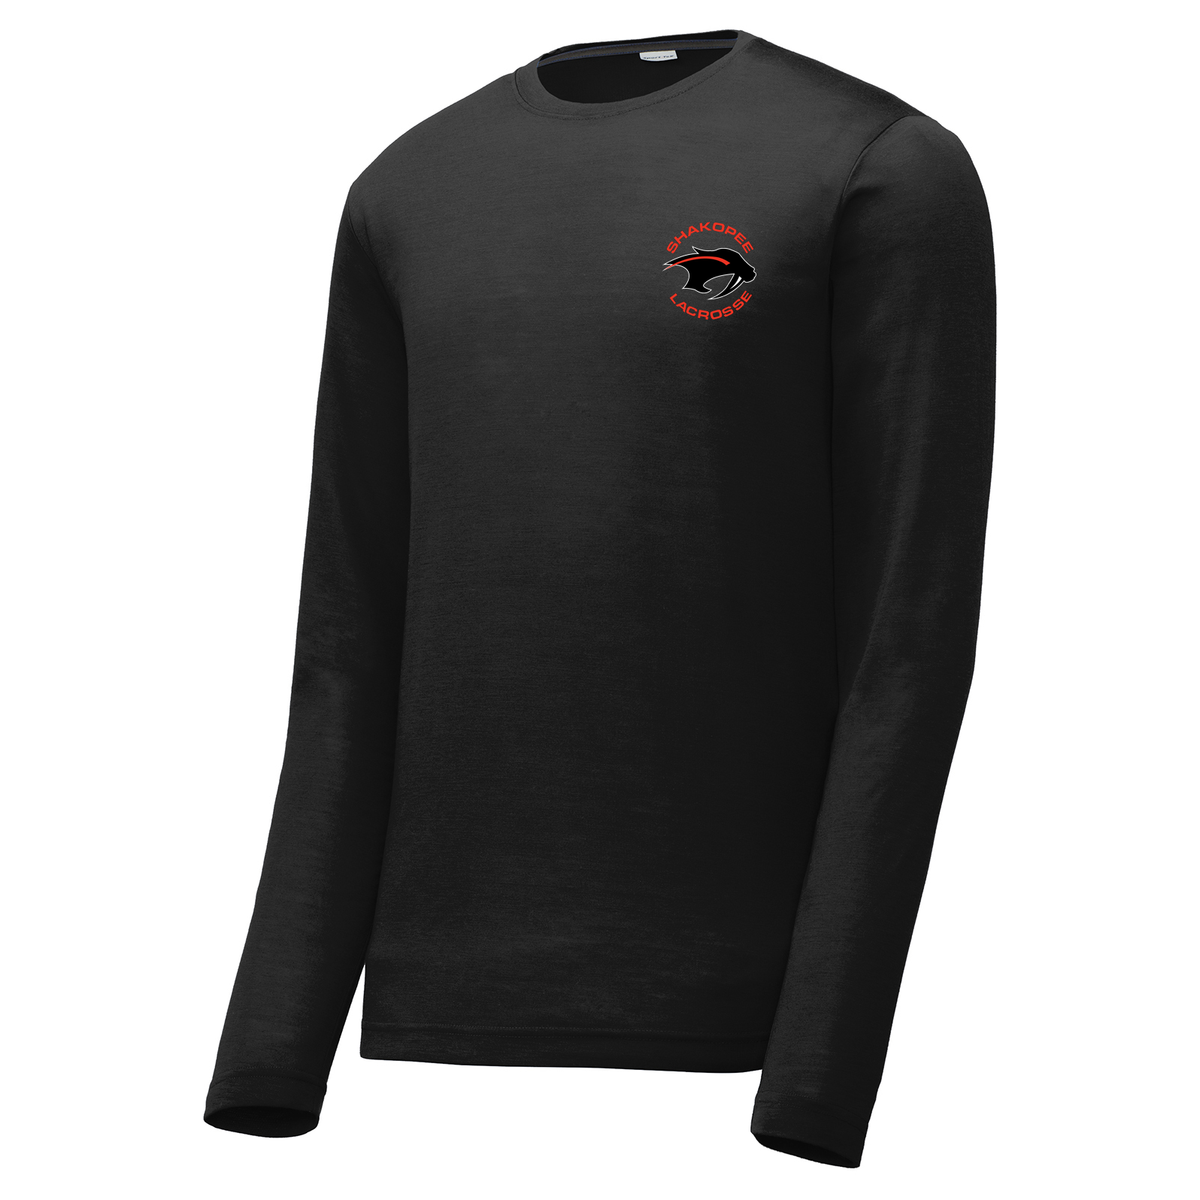 Shakopee Lacrosse Black Long Sleeve Performance Shirt